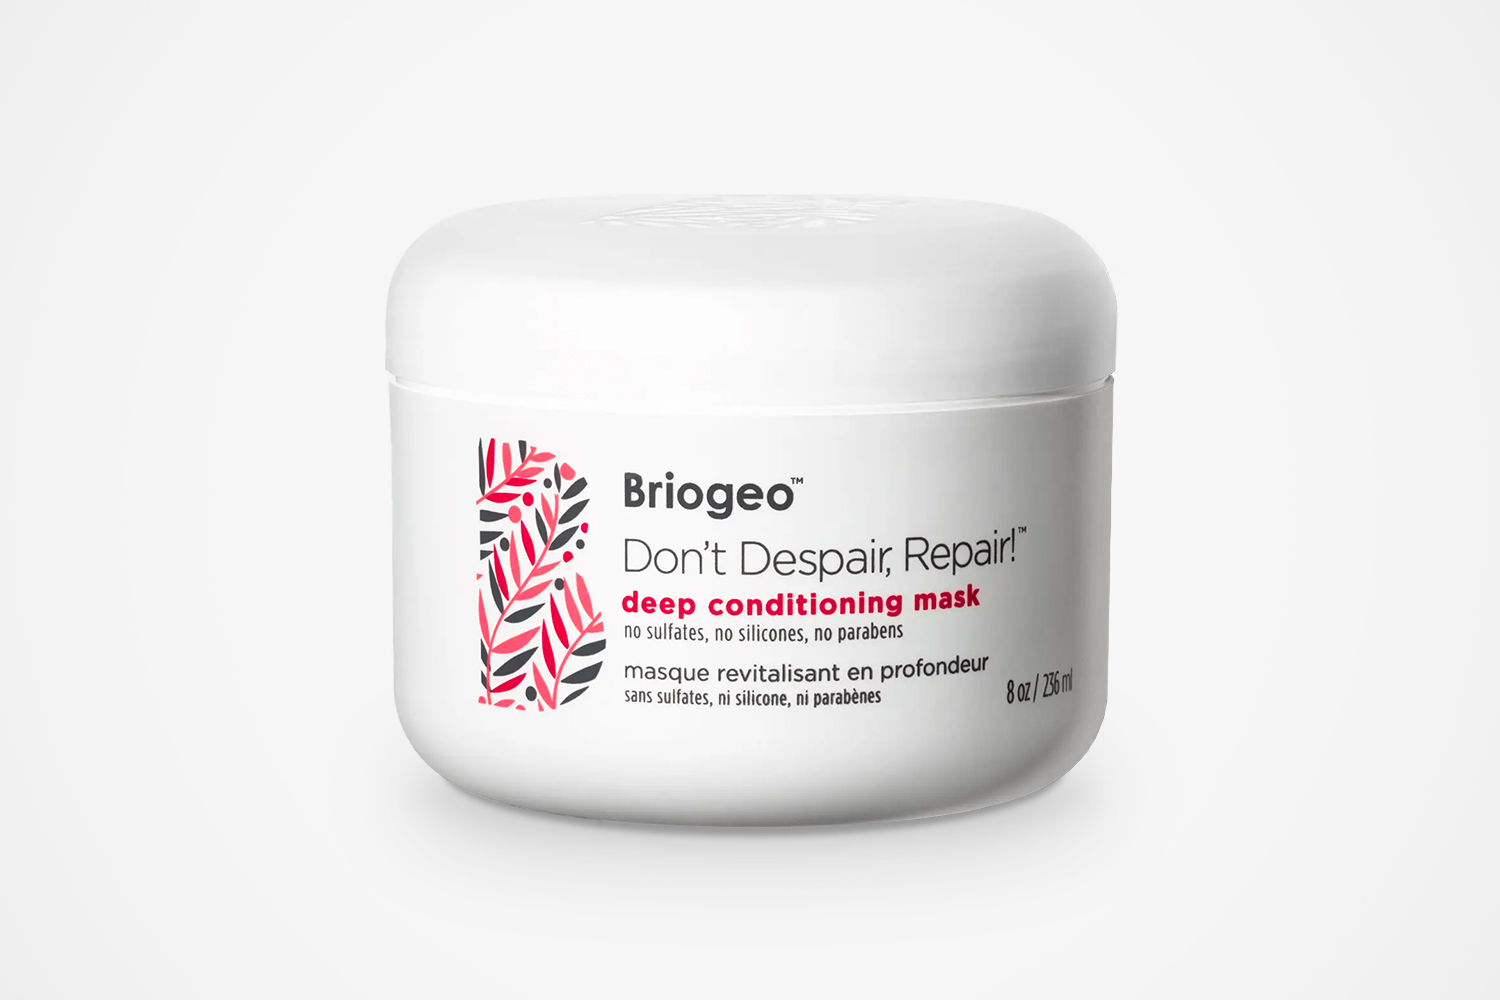 Briogeo Hair Conditioning Mask Nordstrom Image